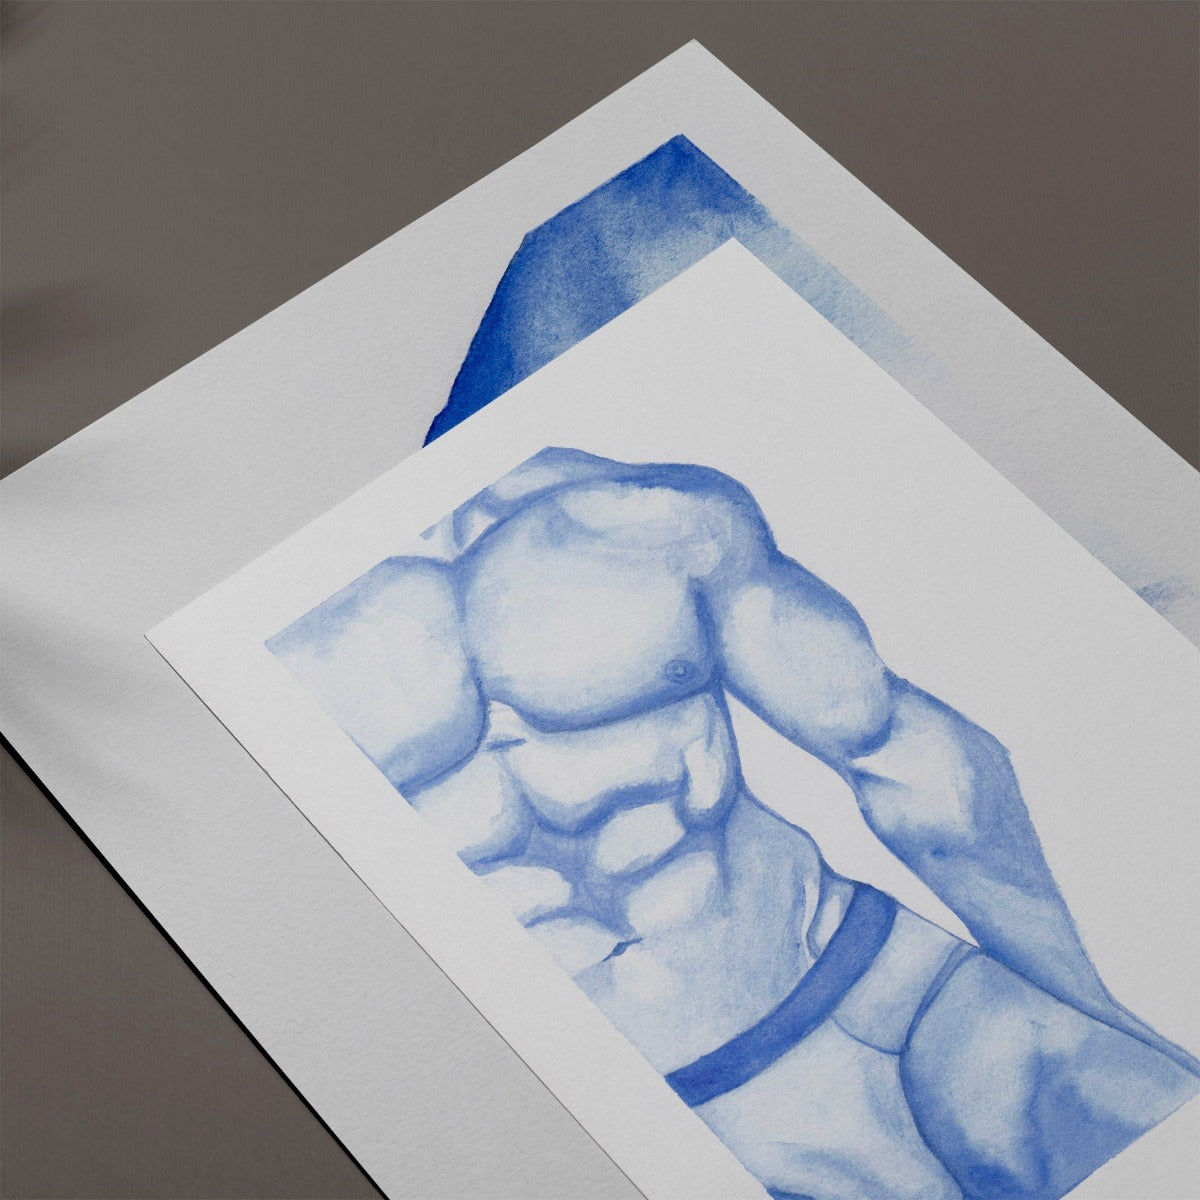 Art print of a muscular man in underwear